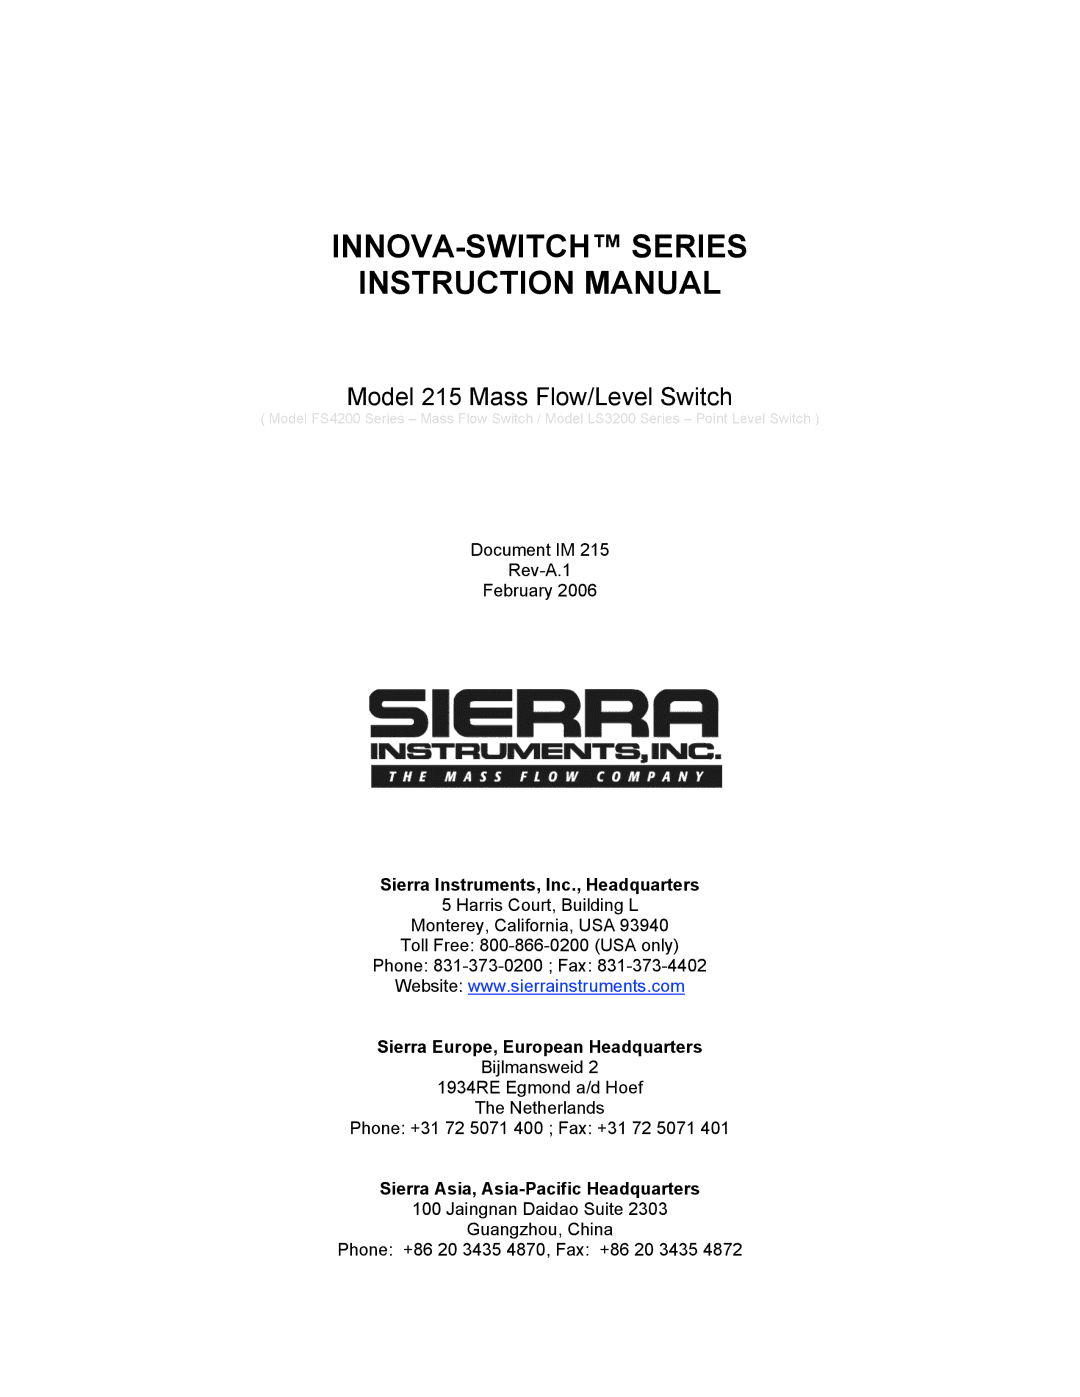 Sierra 215 manual INNOVA-SWITCH Series 